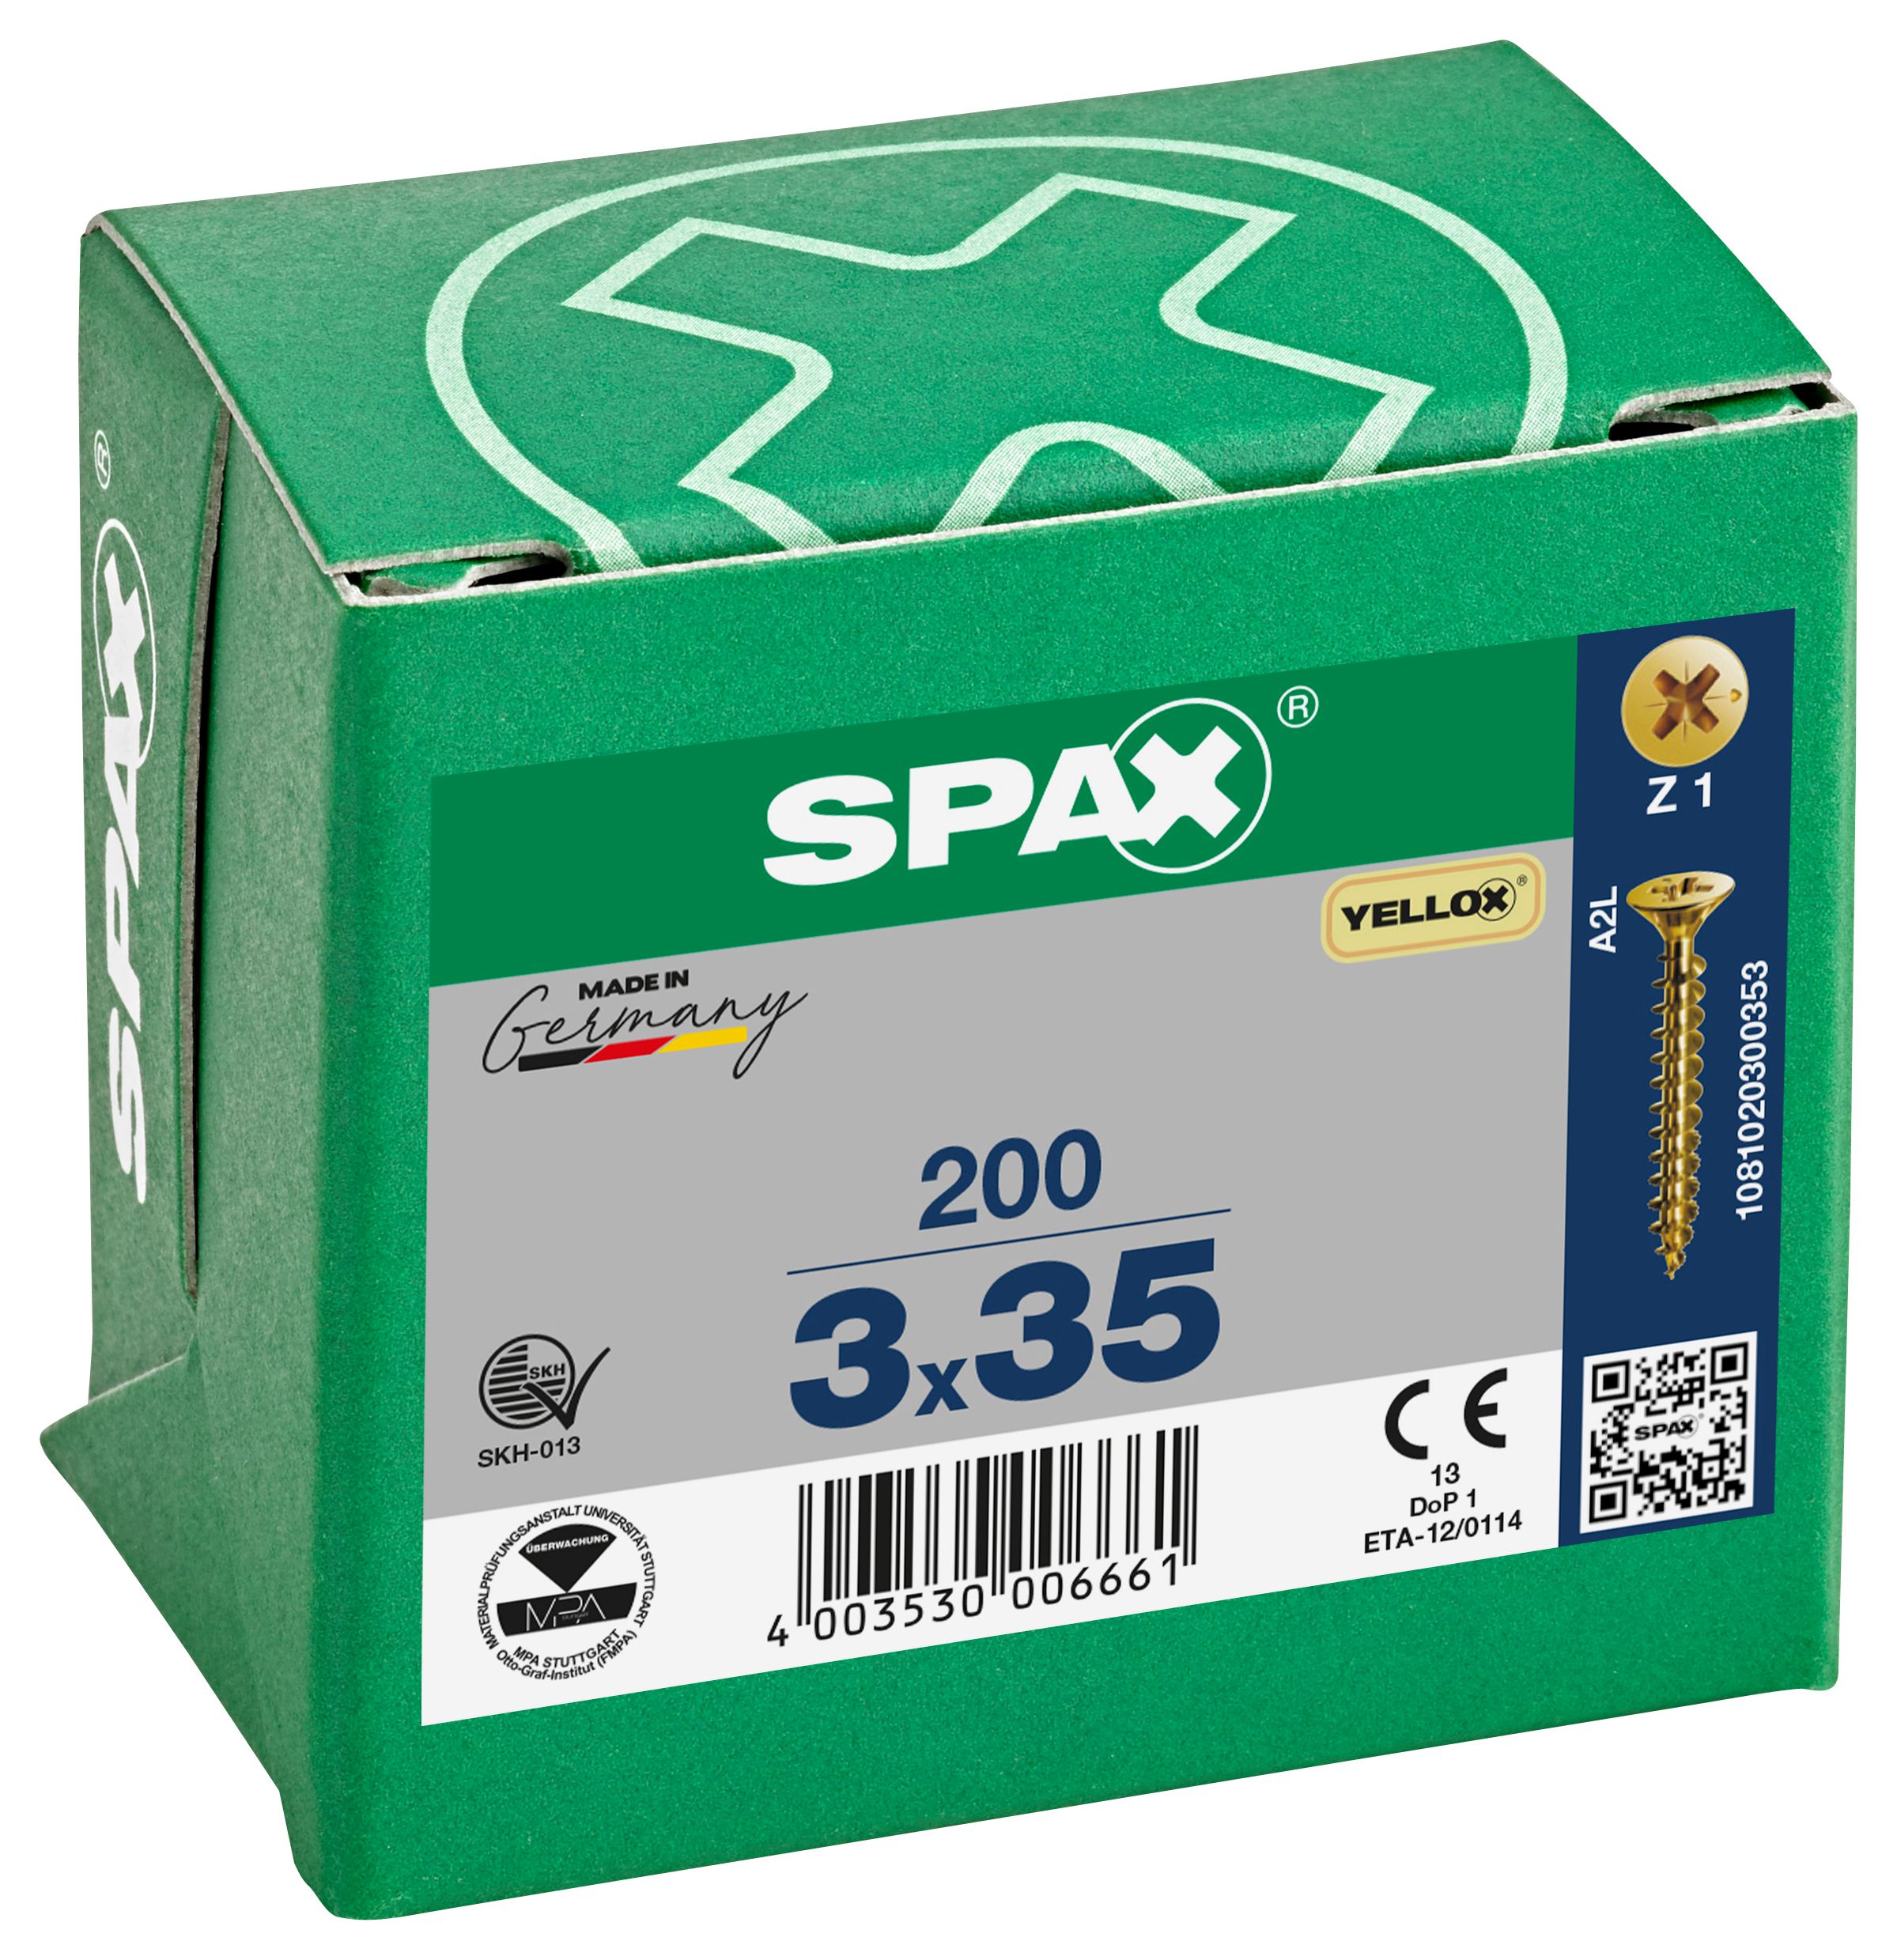 Spax Pz Countersunk Yellox Screws - 3x35mm Pack Of 200